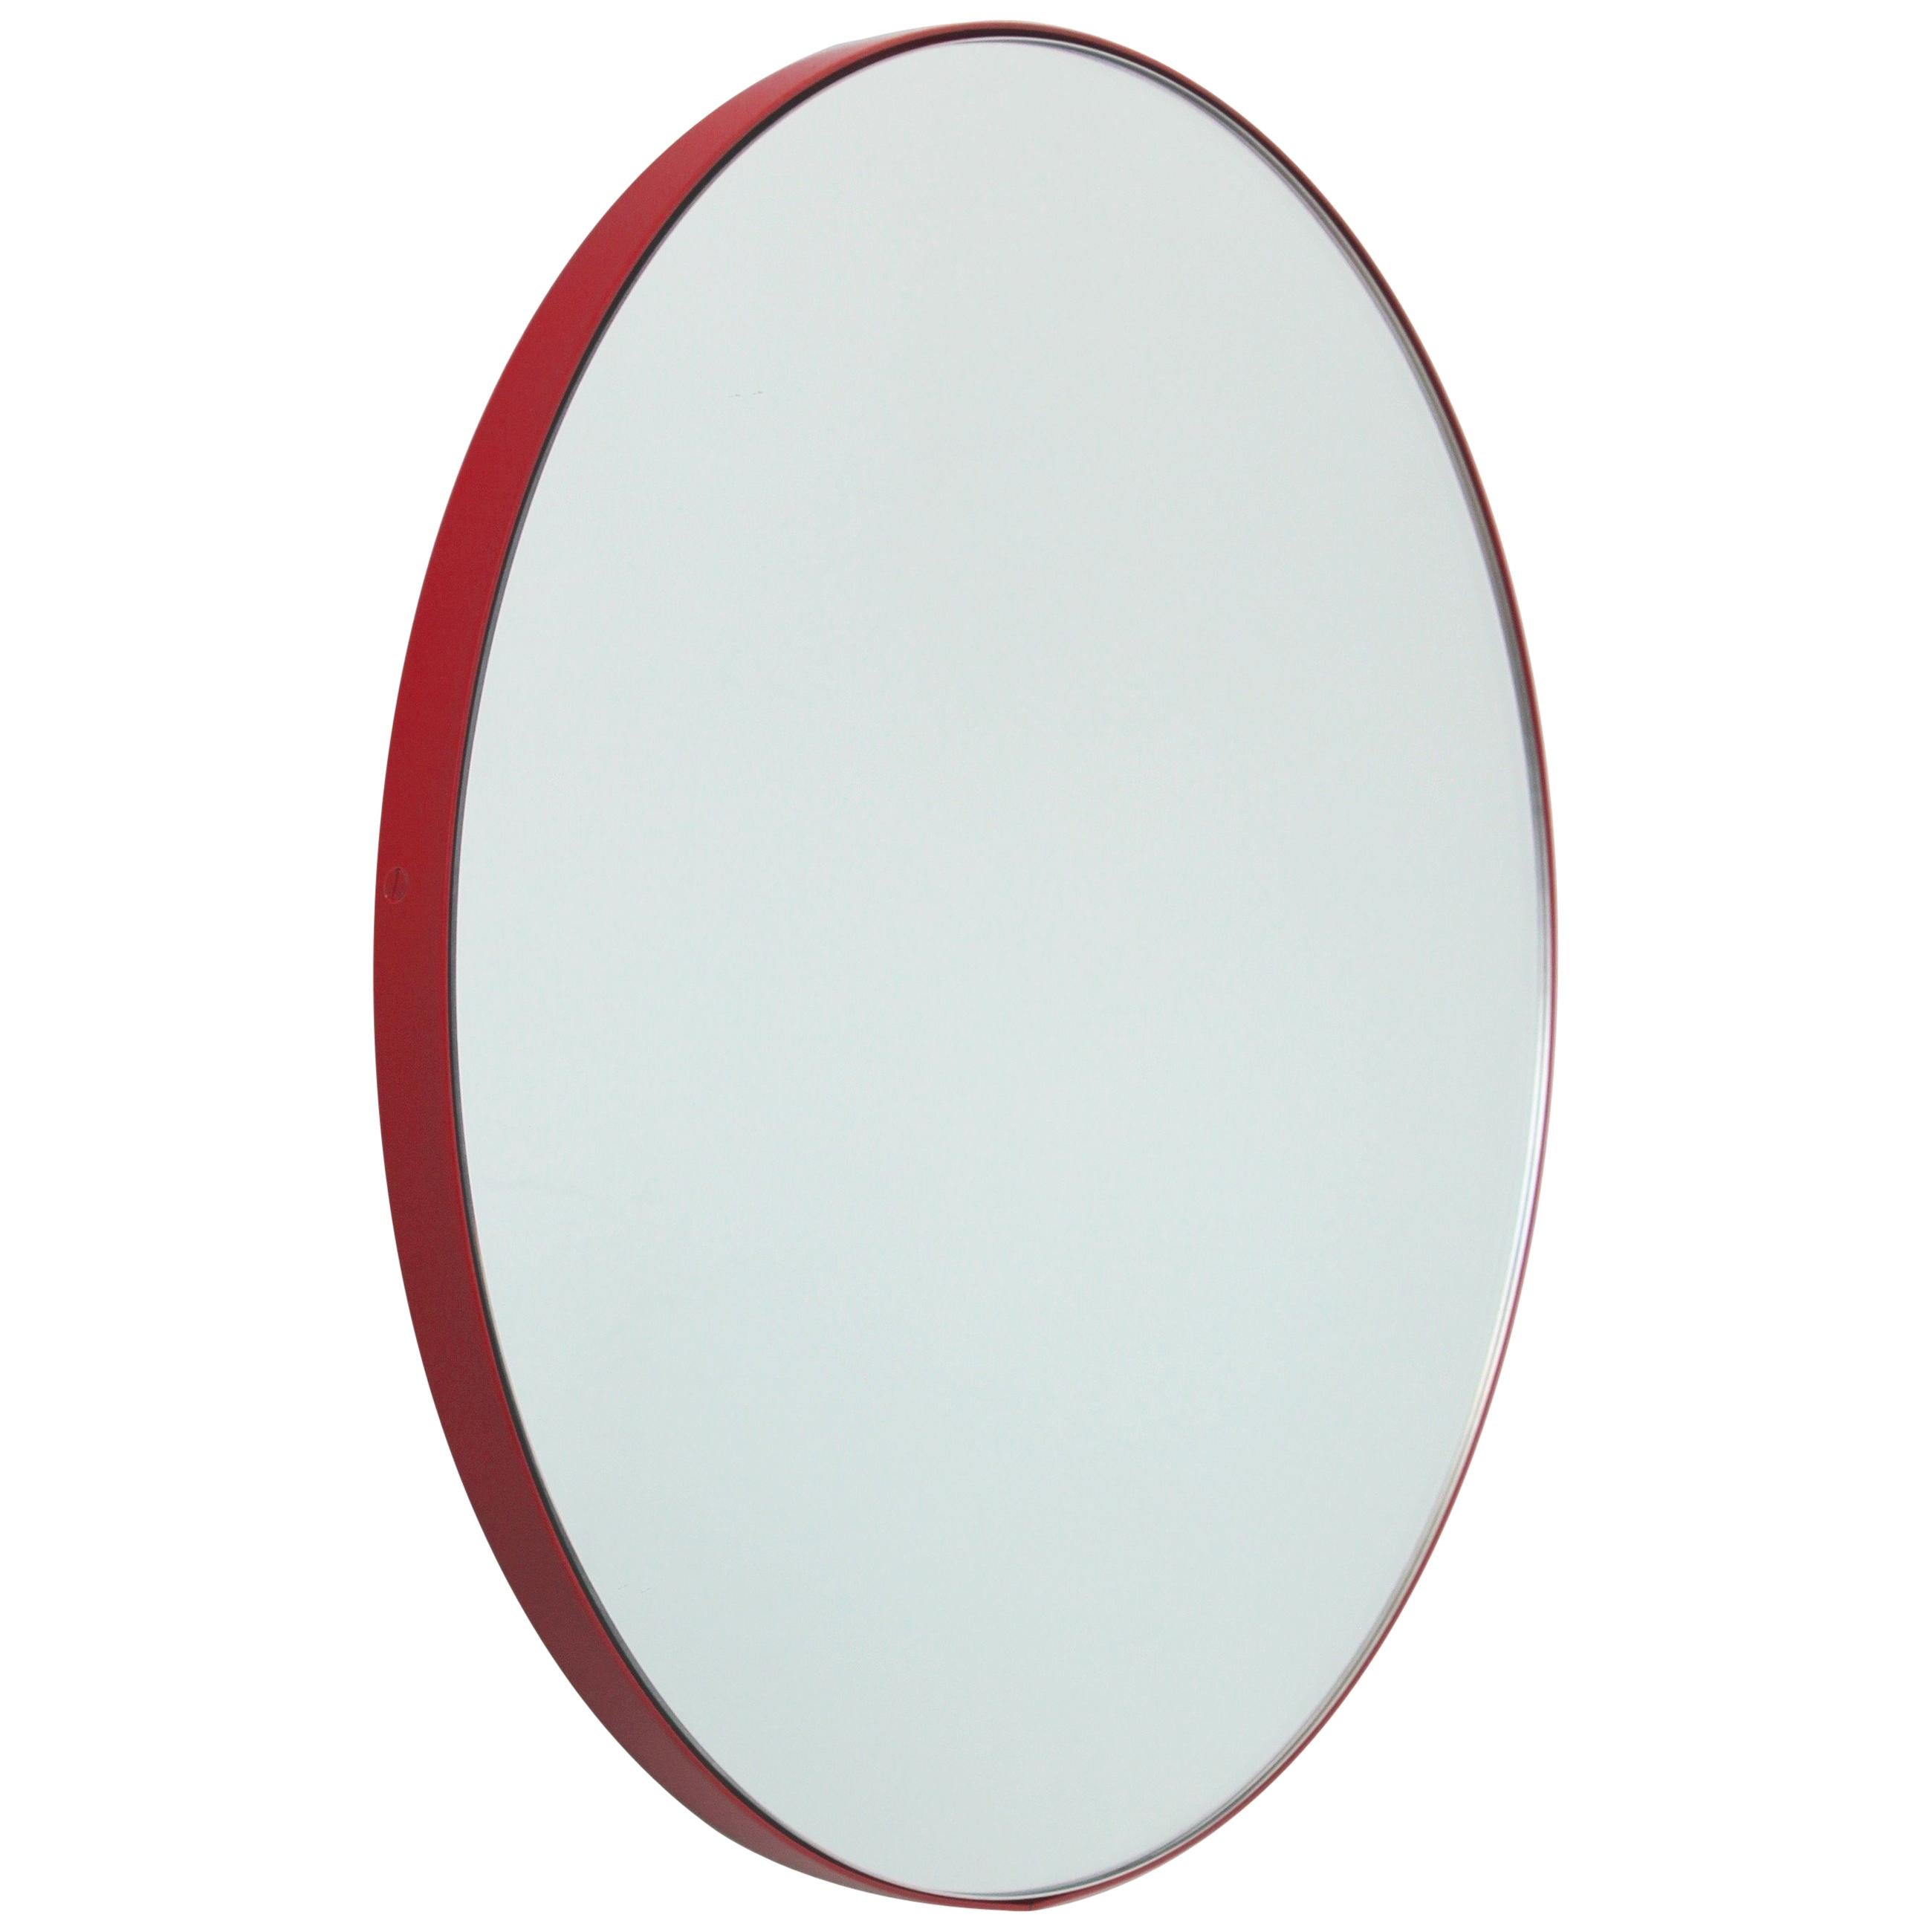 Orbis Round Contemporary Mirror with Red Frame, Regular